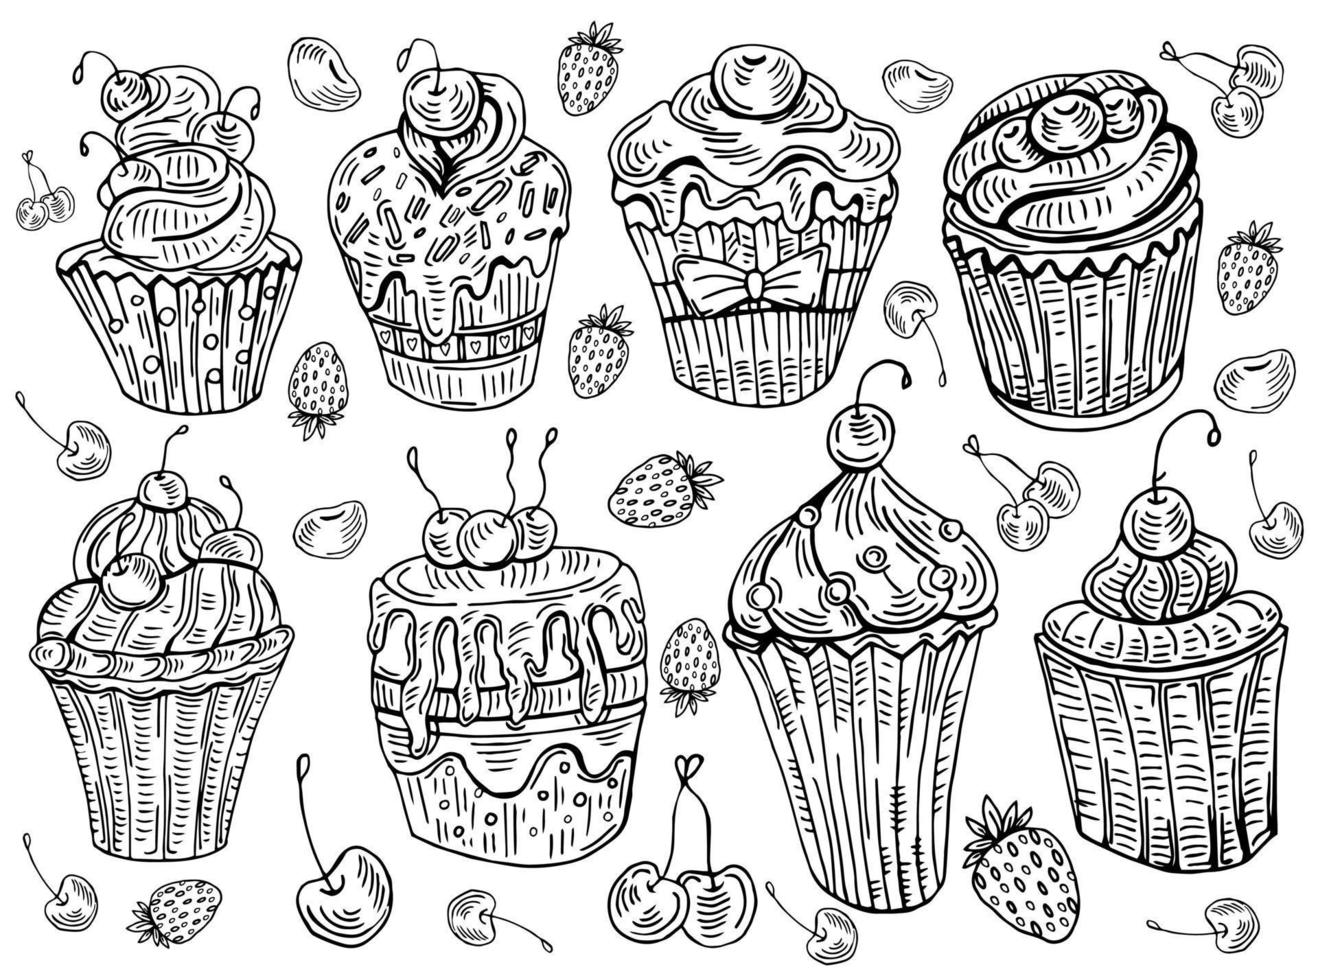 cupcakes dibujados a mano en estilo boceto vector